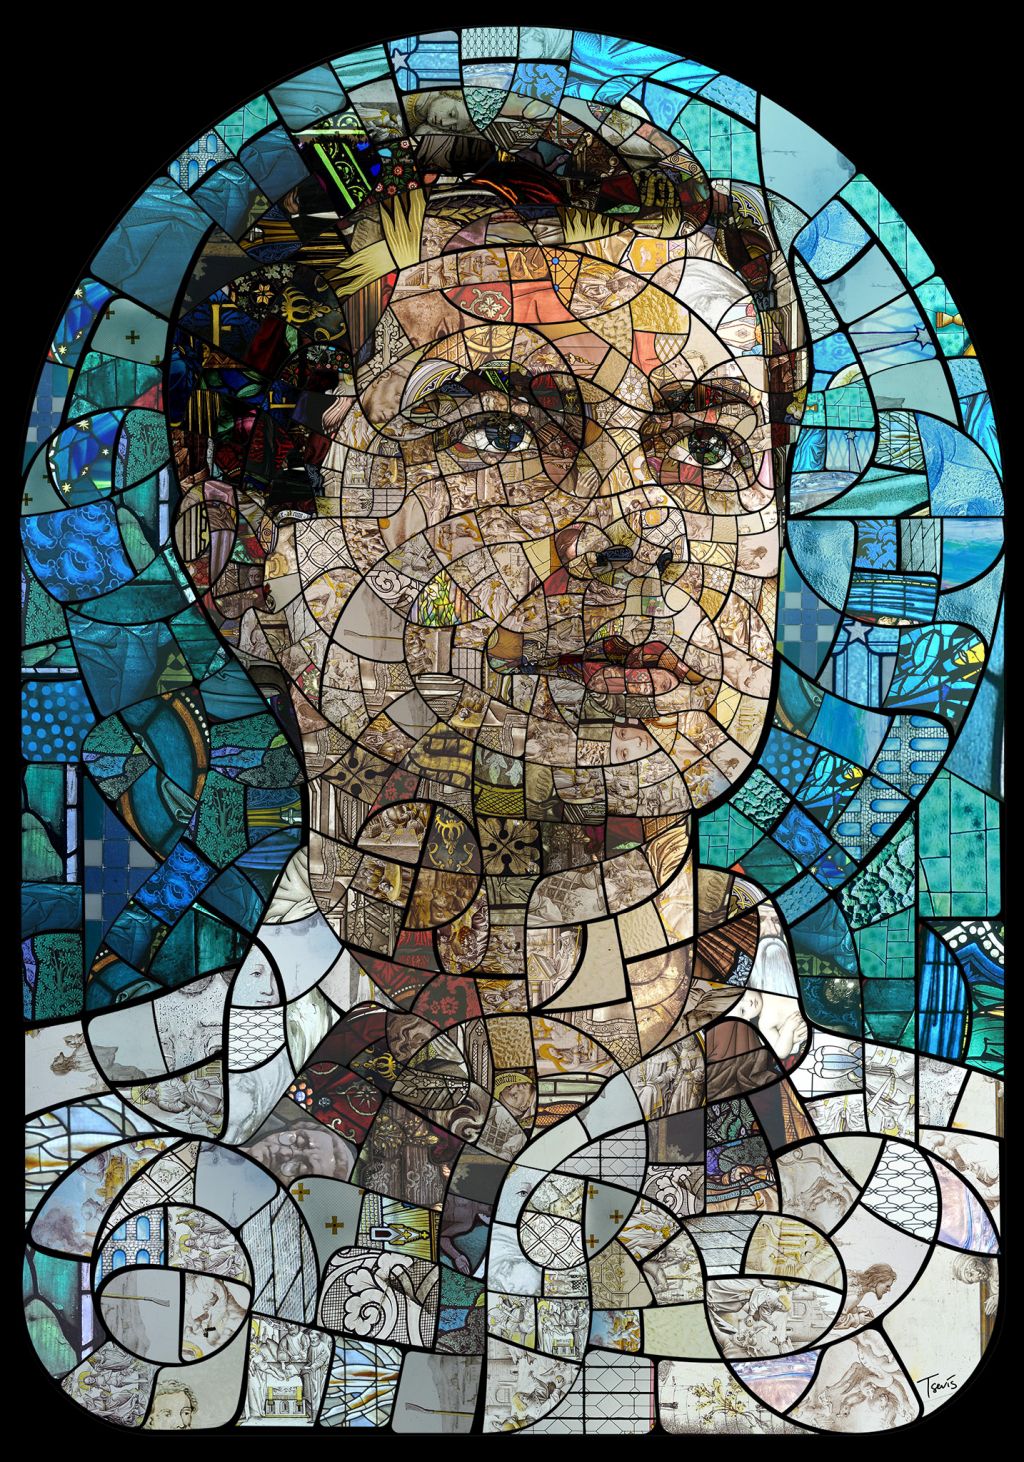 portrait photo mosaic of pete buttigieg